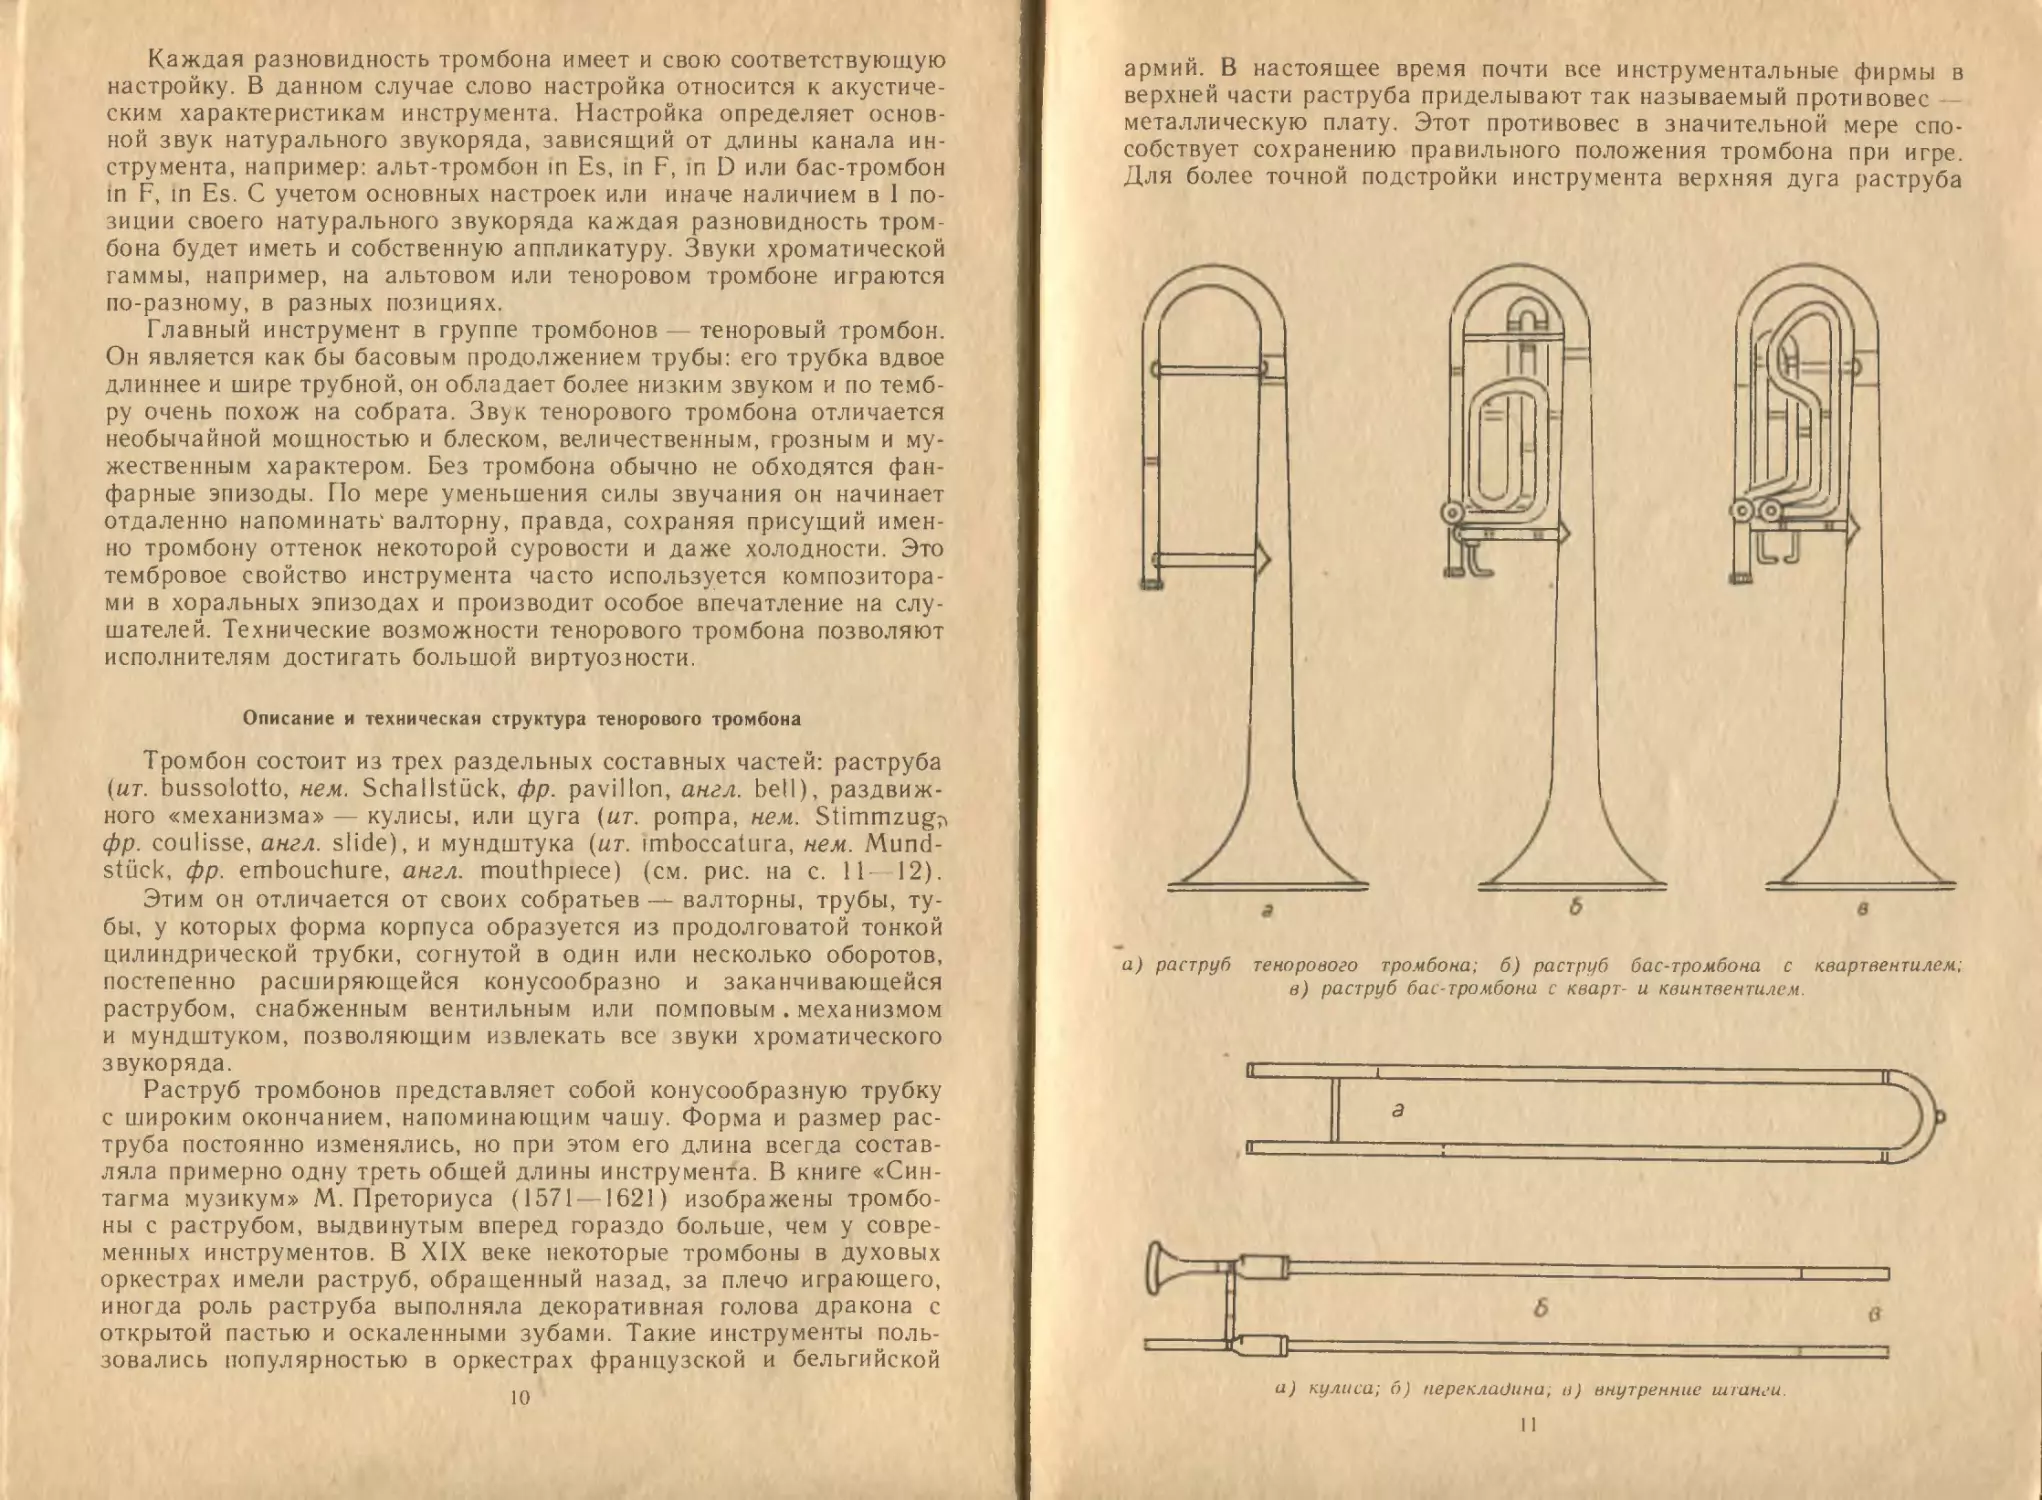 Описание тромбона